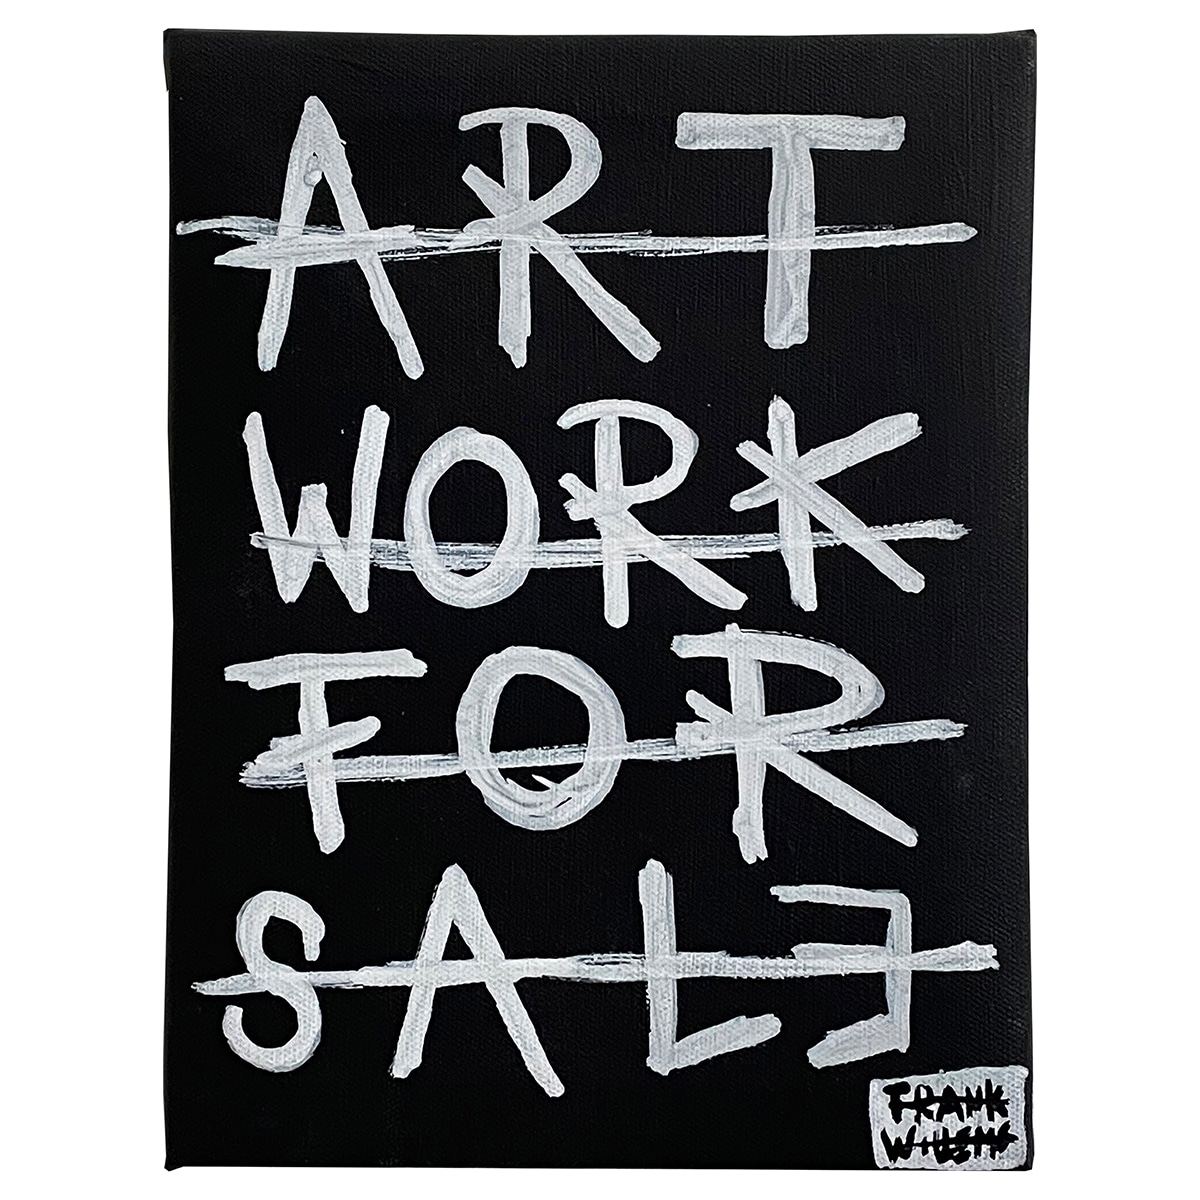 ARTWORK FOR SALE